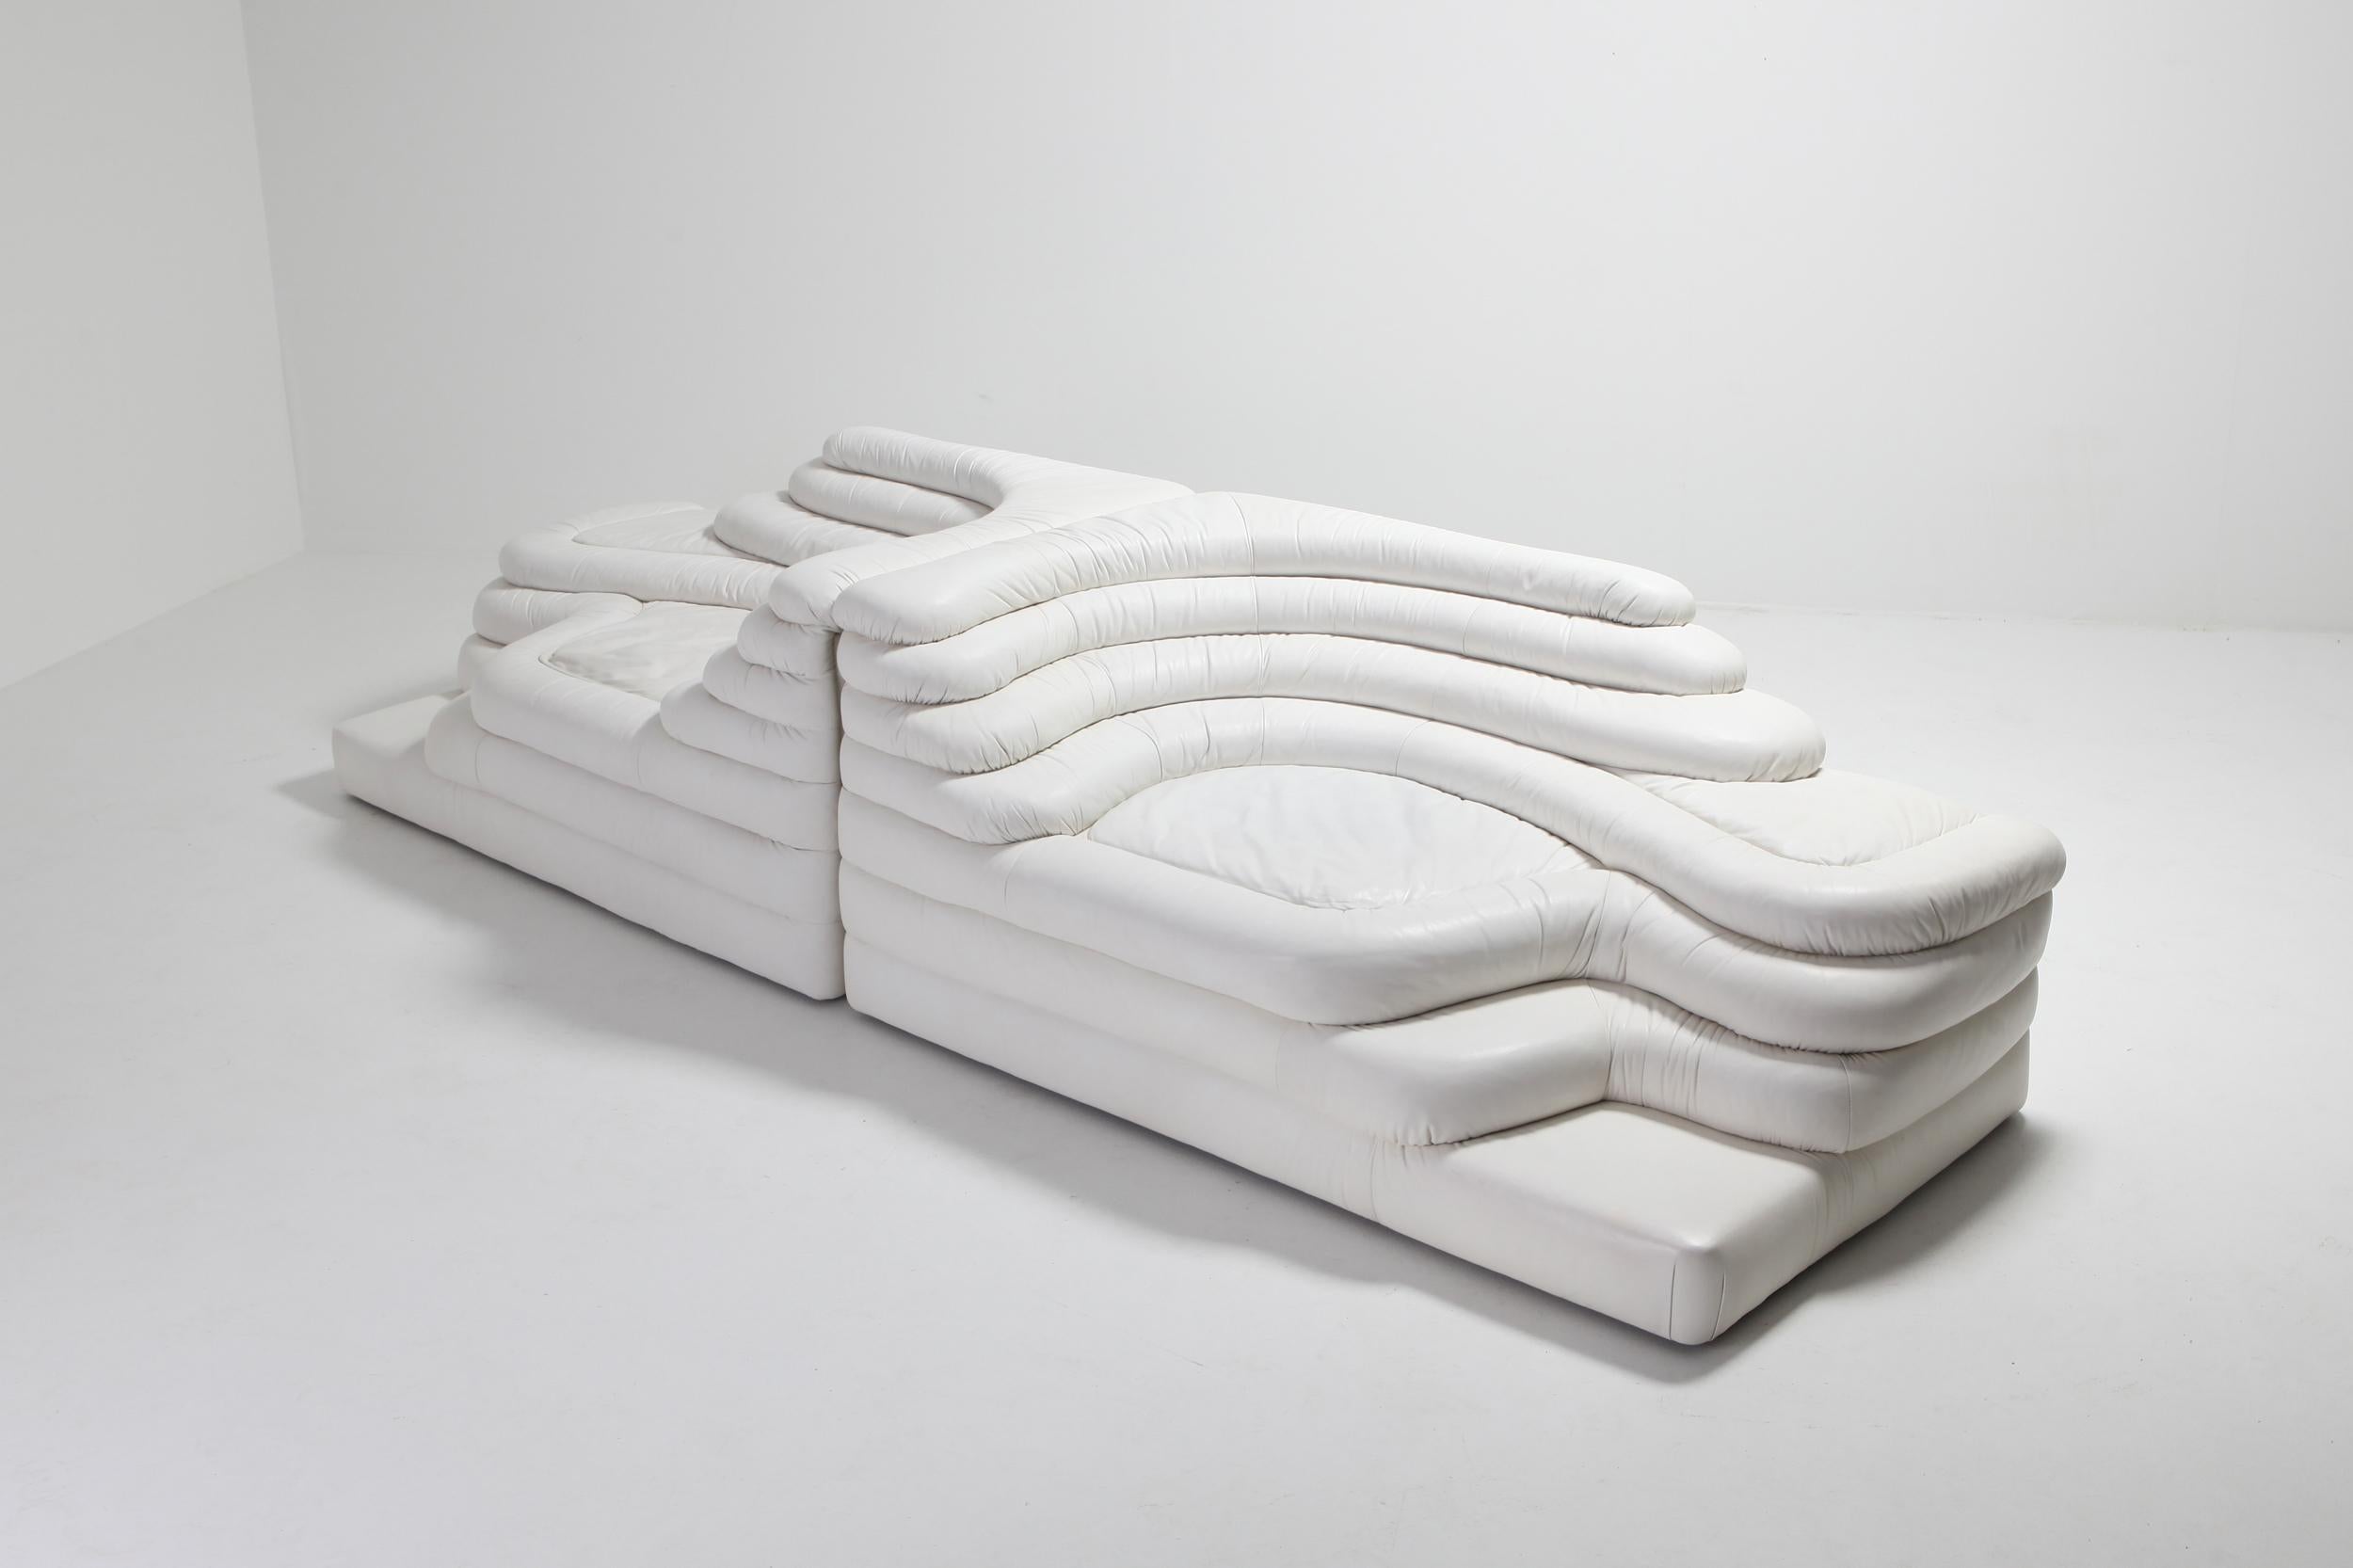 De Sede 'Terrazza' Sofas DS 1025 in White Leather 1972 by U. Klug & Ueli Berger 2